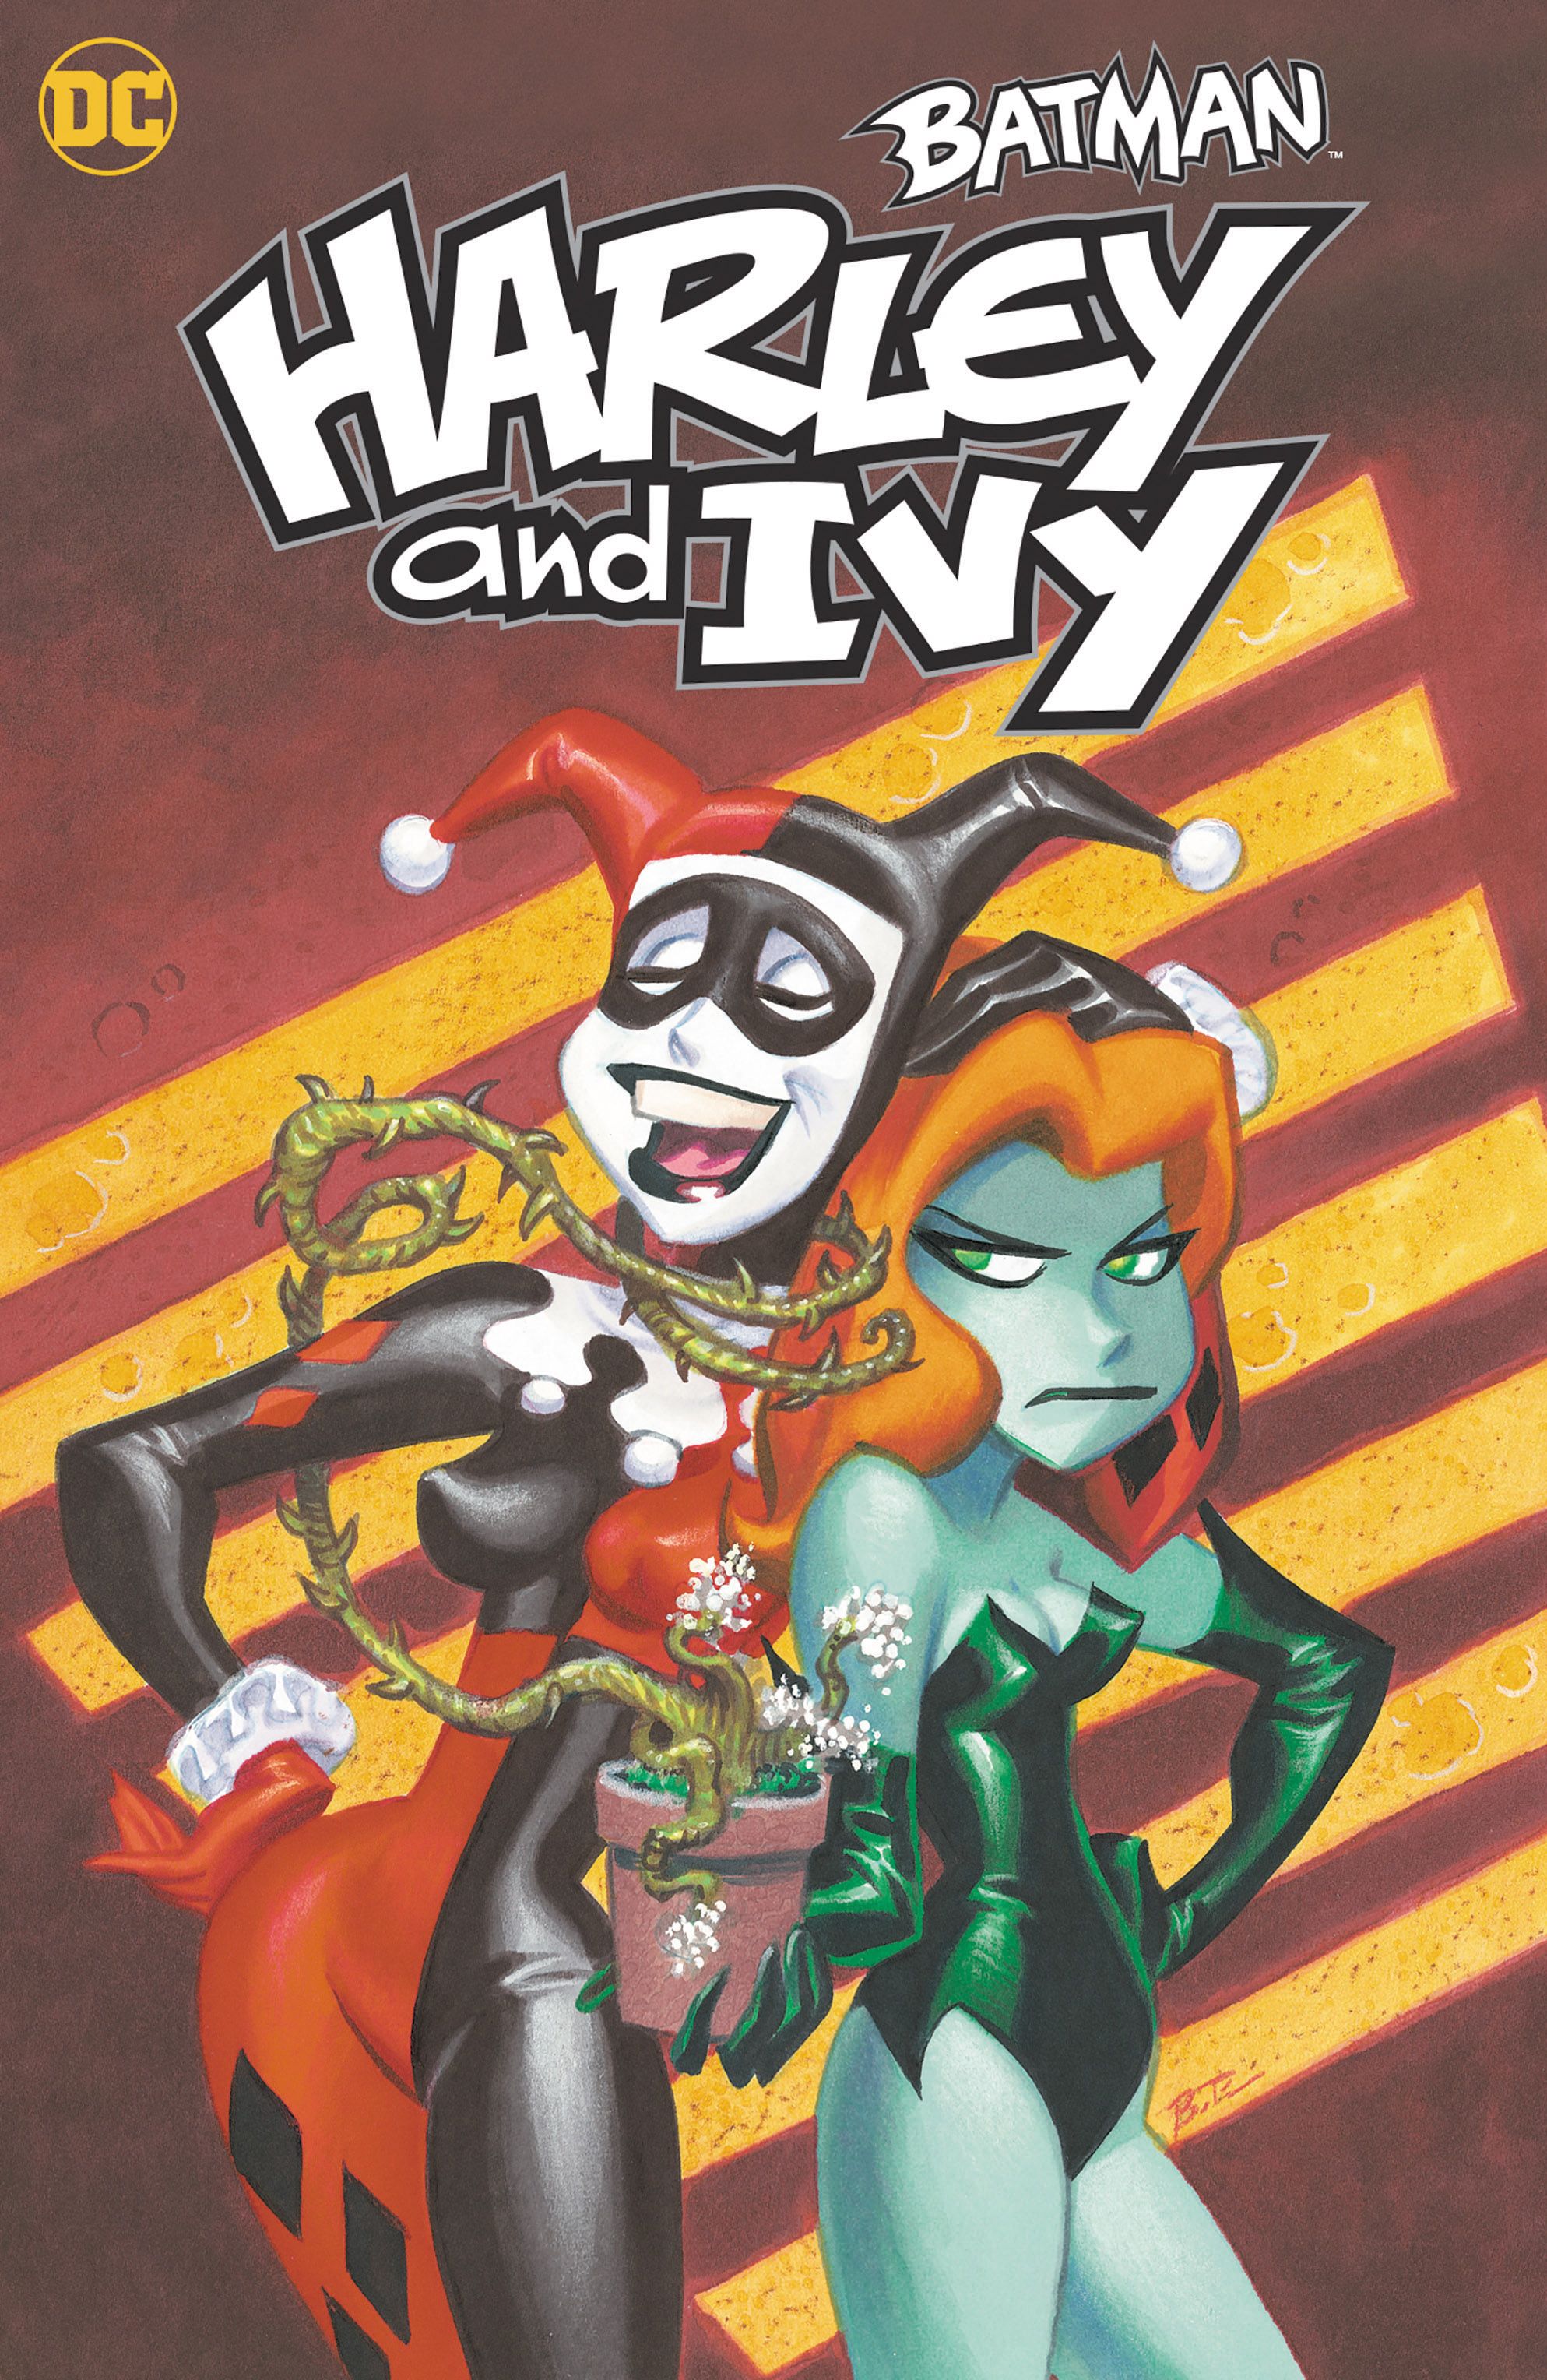 Batman Harley and Ivy